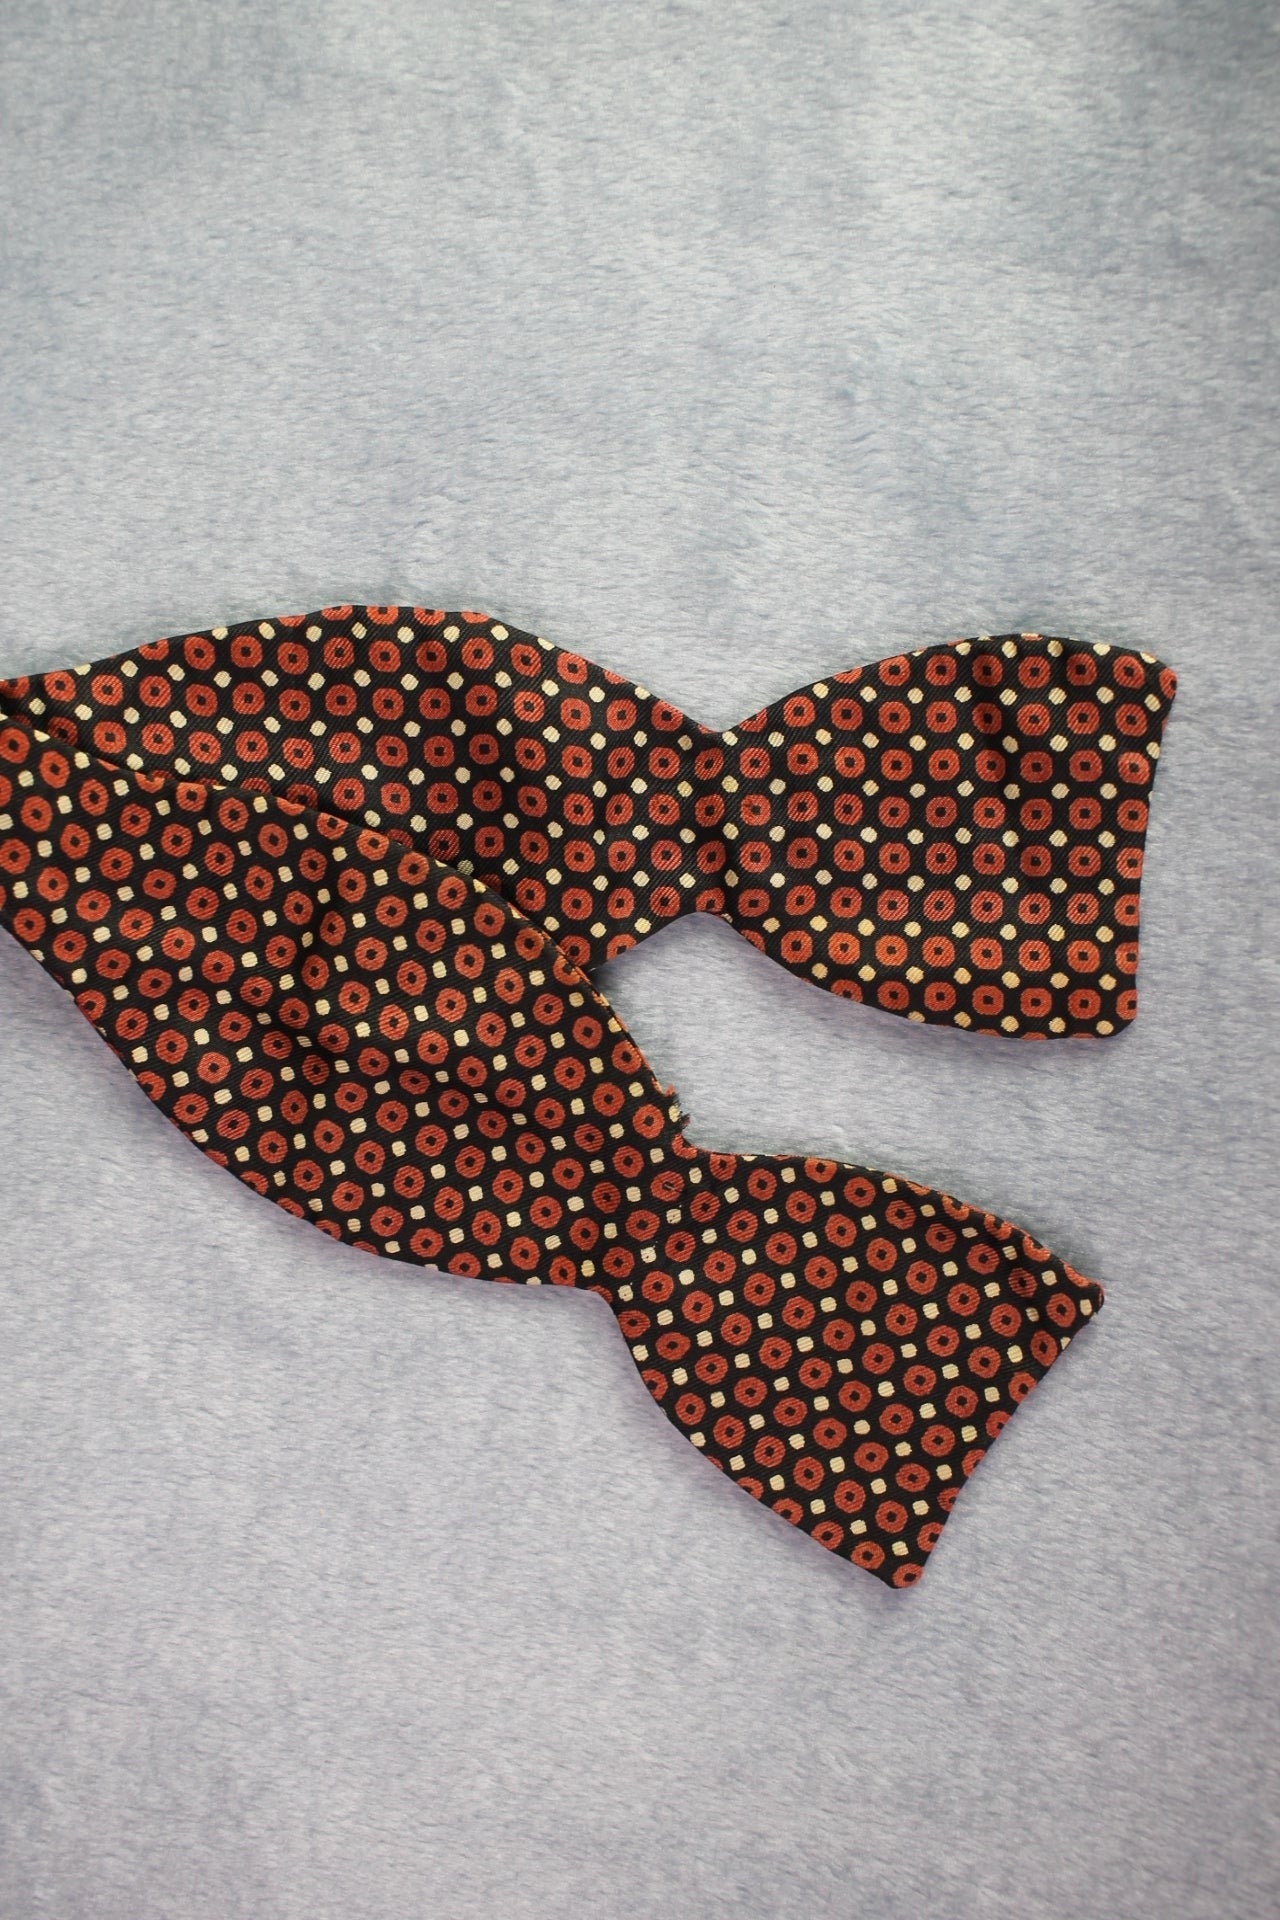 Vintage Countess Wara self tie thistle end orange brown white circle pattern bow tie adjustable